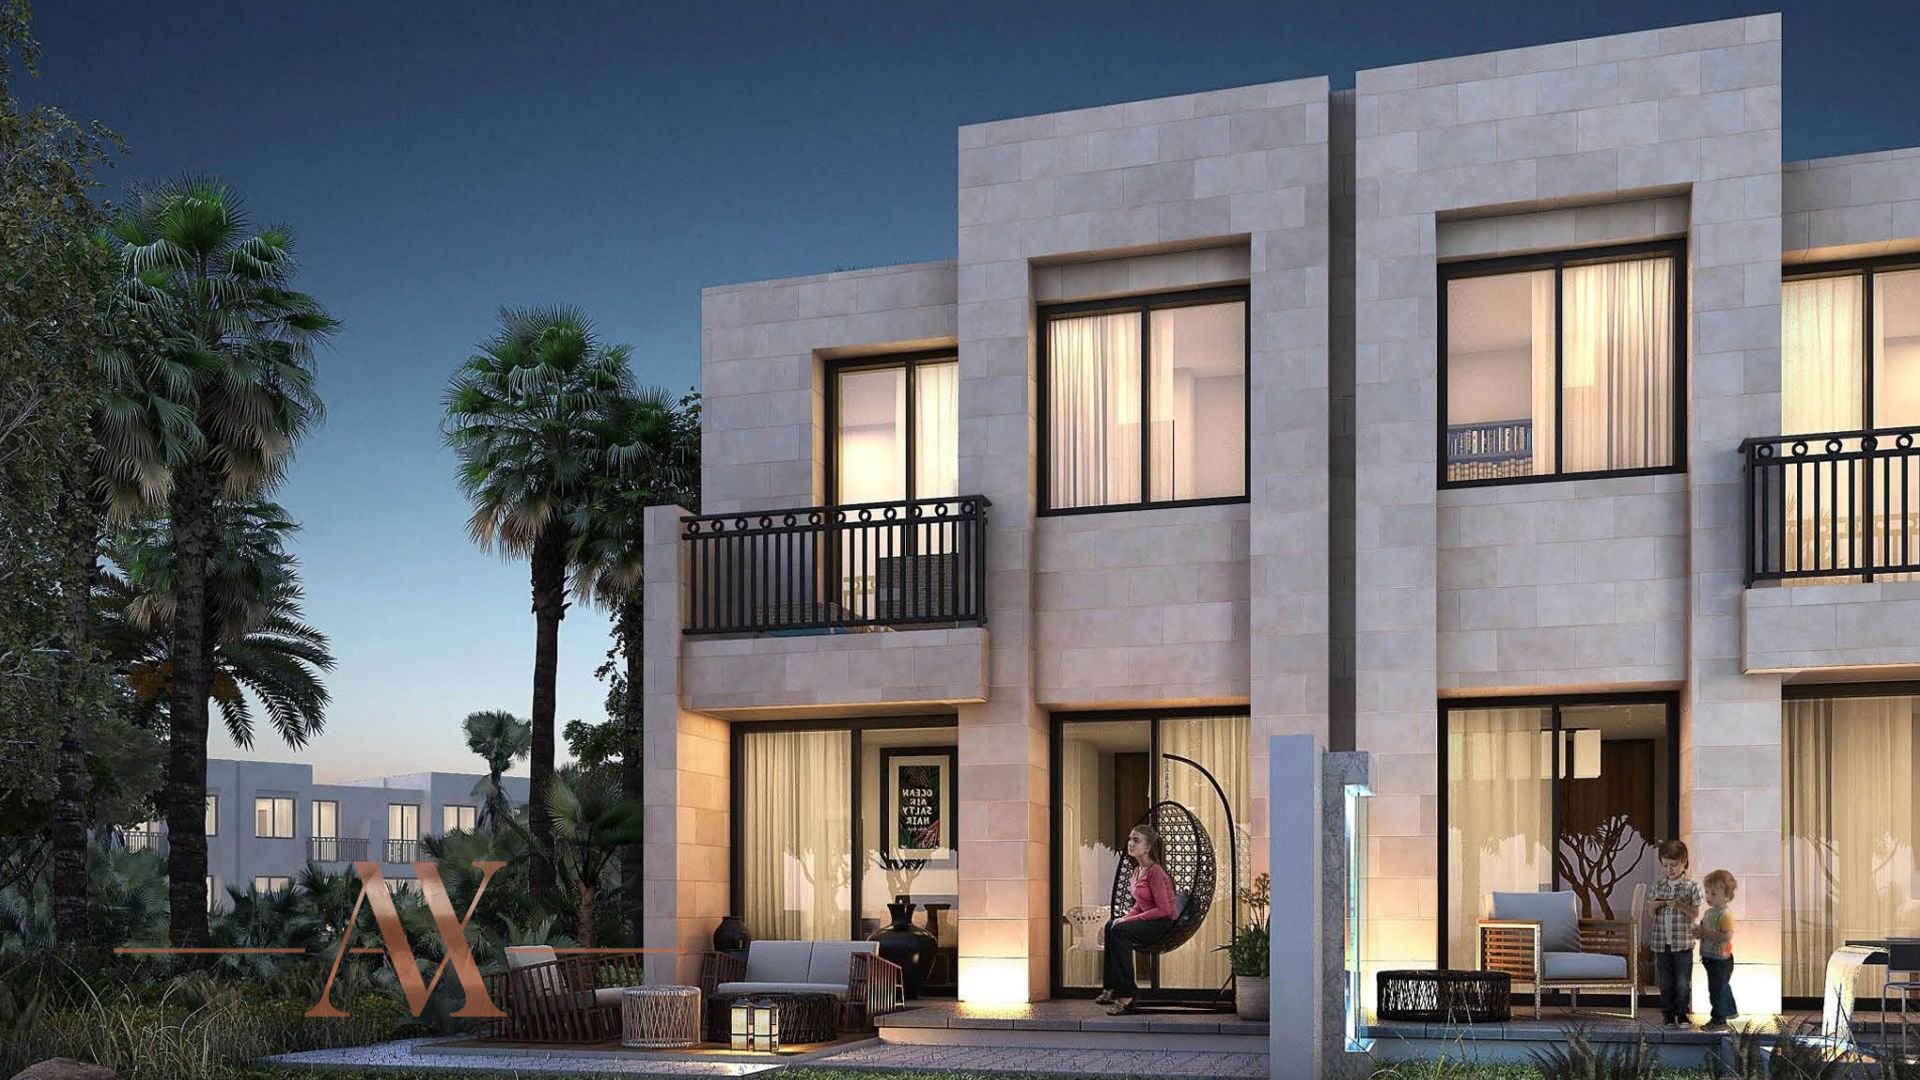 HAJAR STONE VILLAS by Damac Properties in Akoya, Dubai, UAE